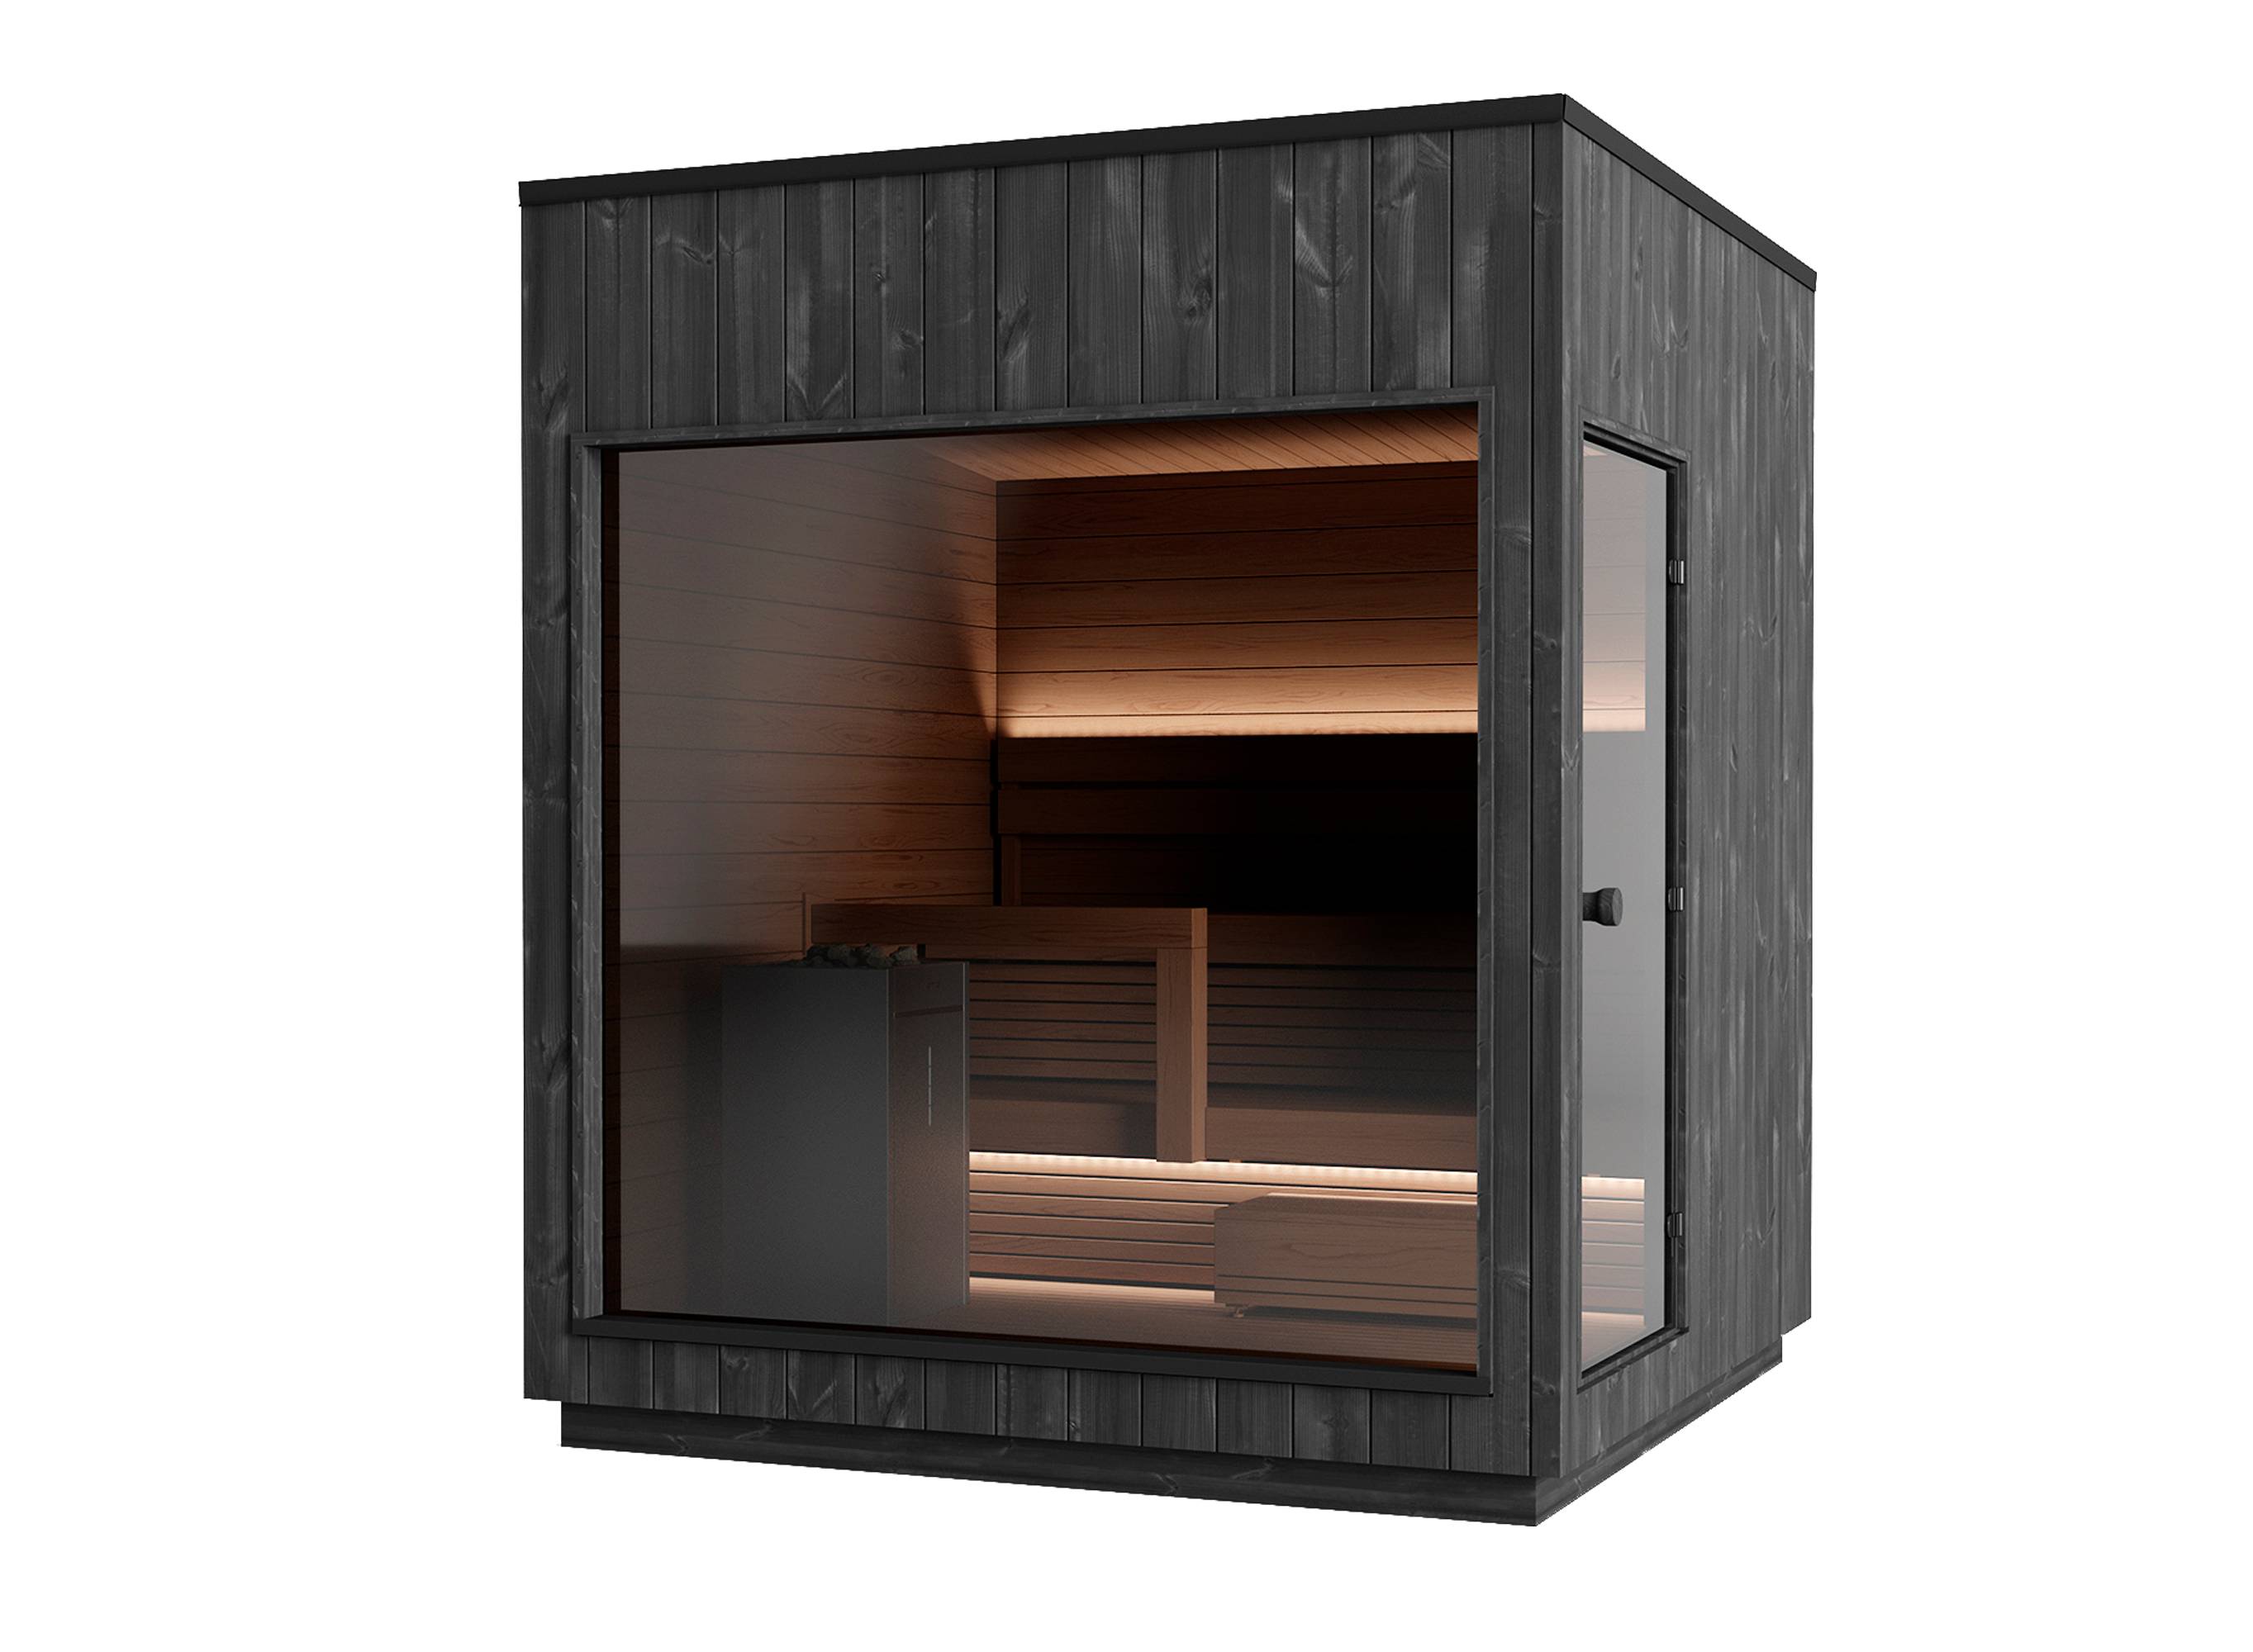 Image constructeur insolite sauna nordic misty